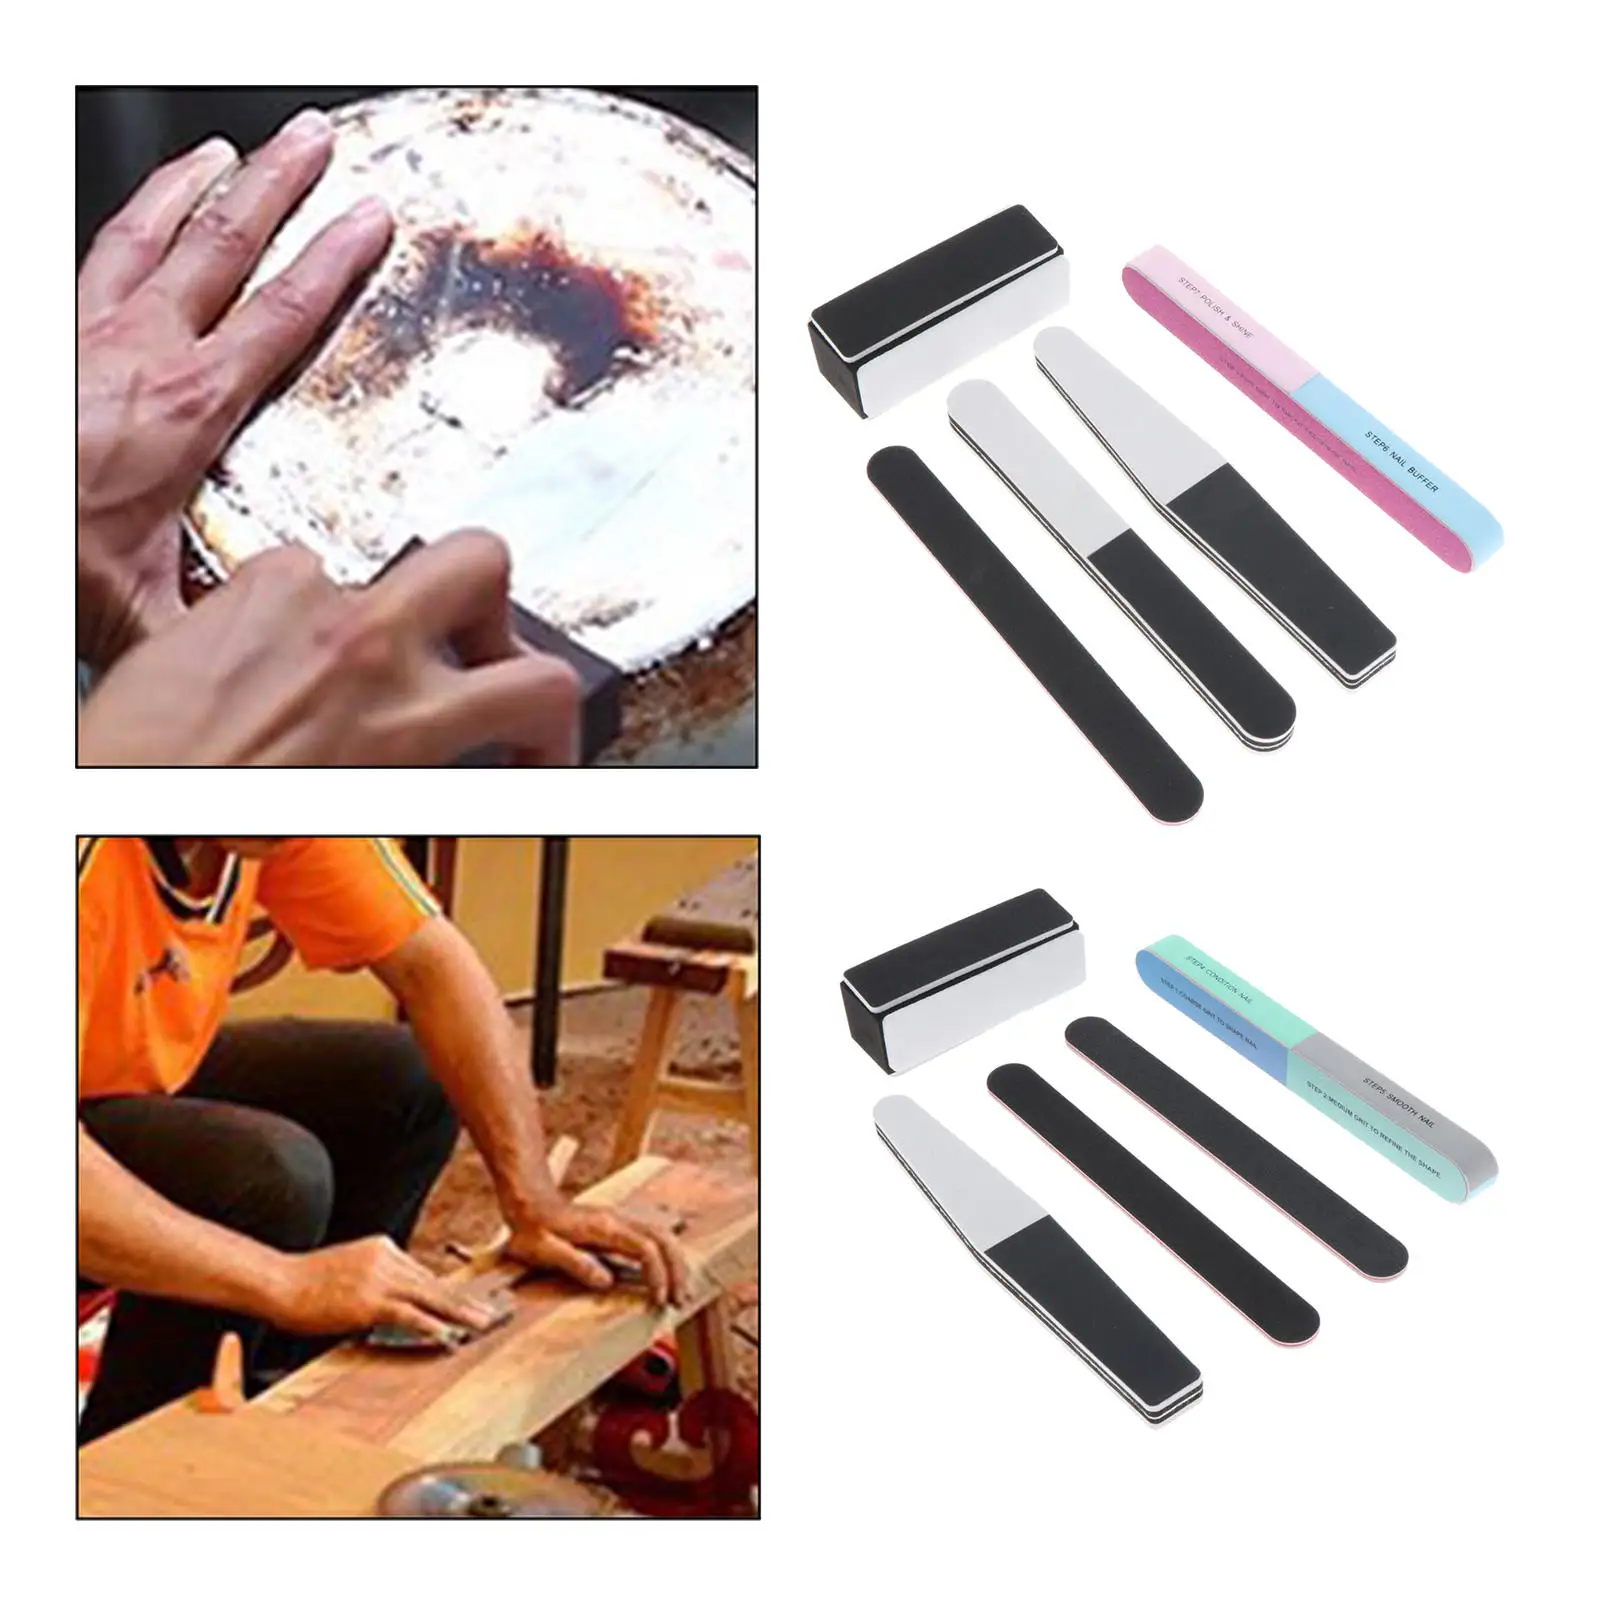 5 Types Craft Hobby Model Tools Sanding Coarse Medium Fine Set Nail Files Emery Board Nail Art Tool Kit for Model Repairing